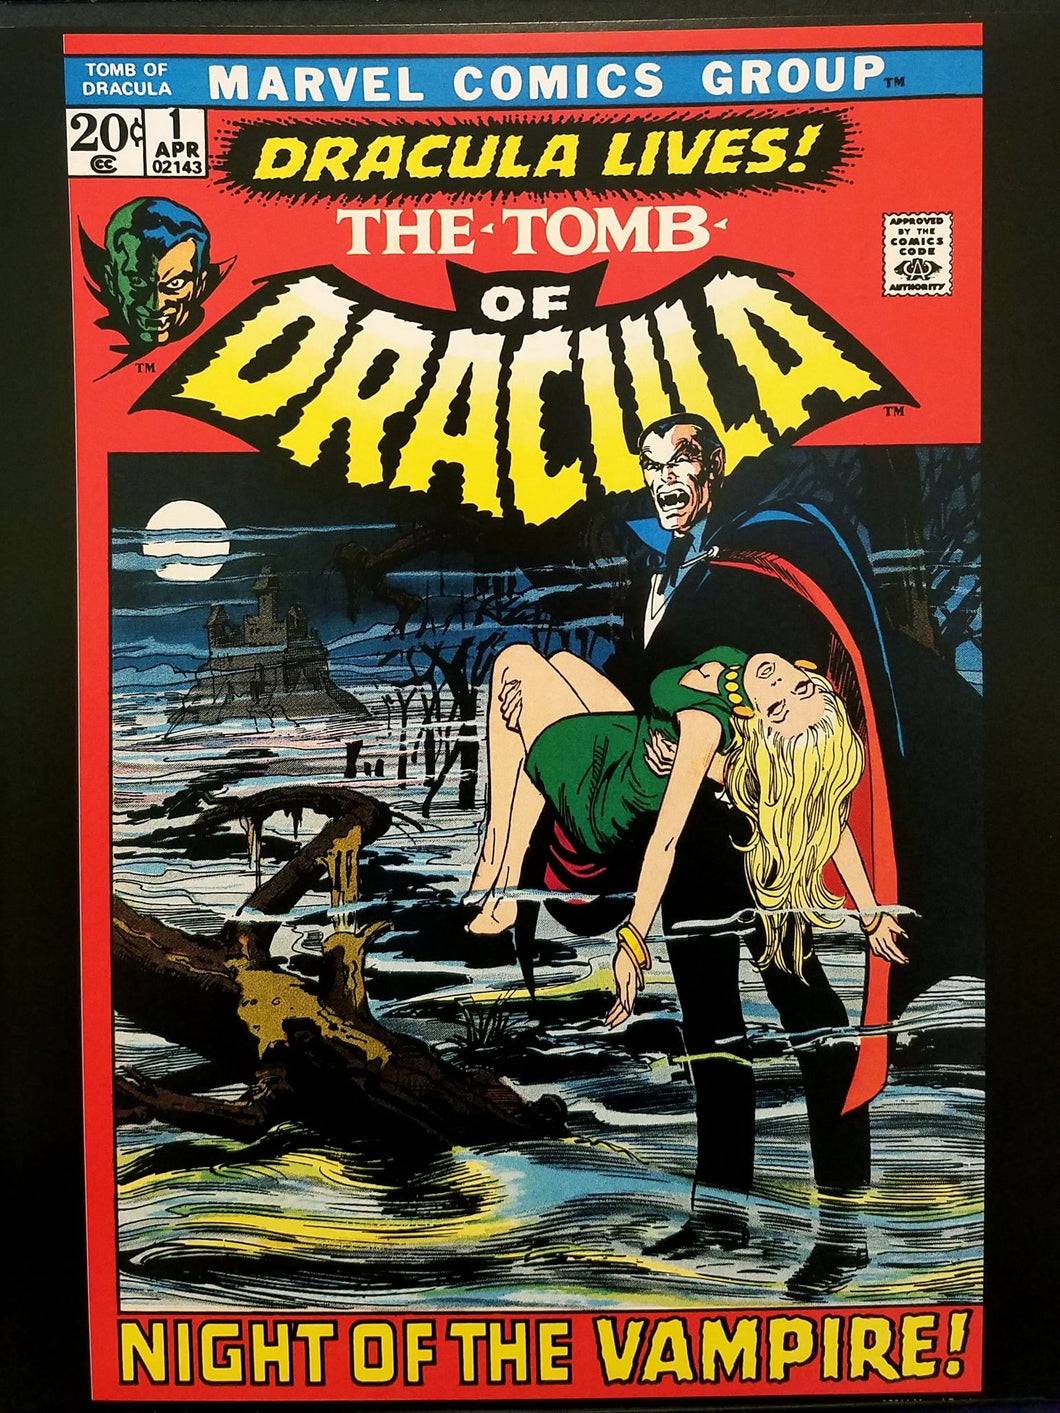 Tomb of Dracula #1 by Gene Colan 11x14 FRAMED Art Print, Vintage Marvel Comics